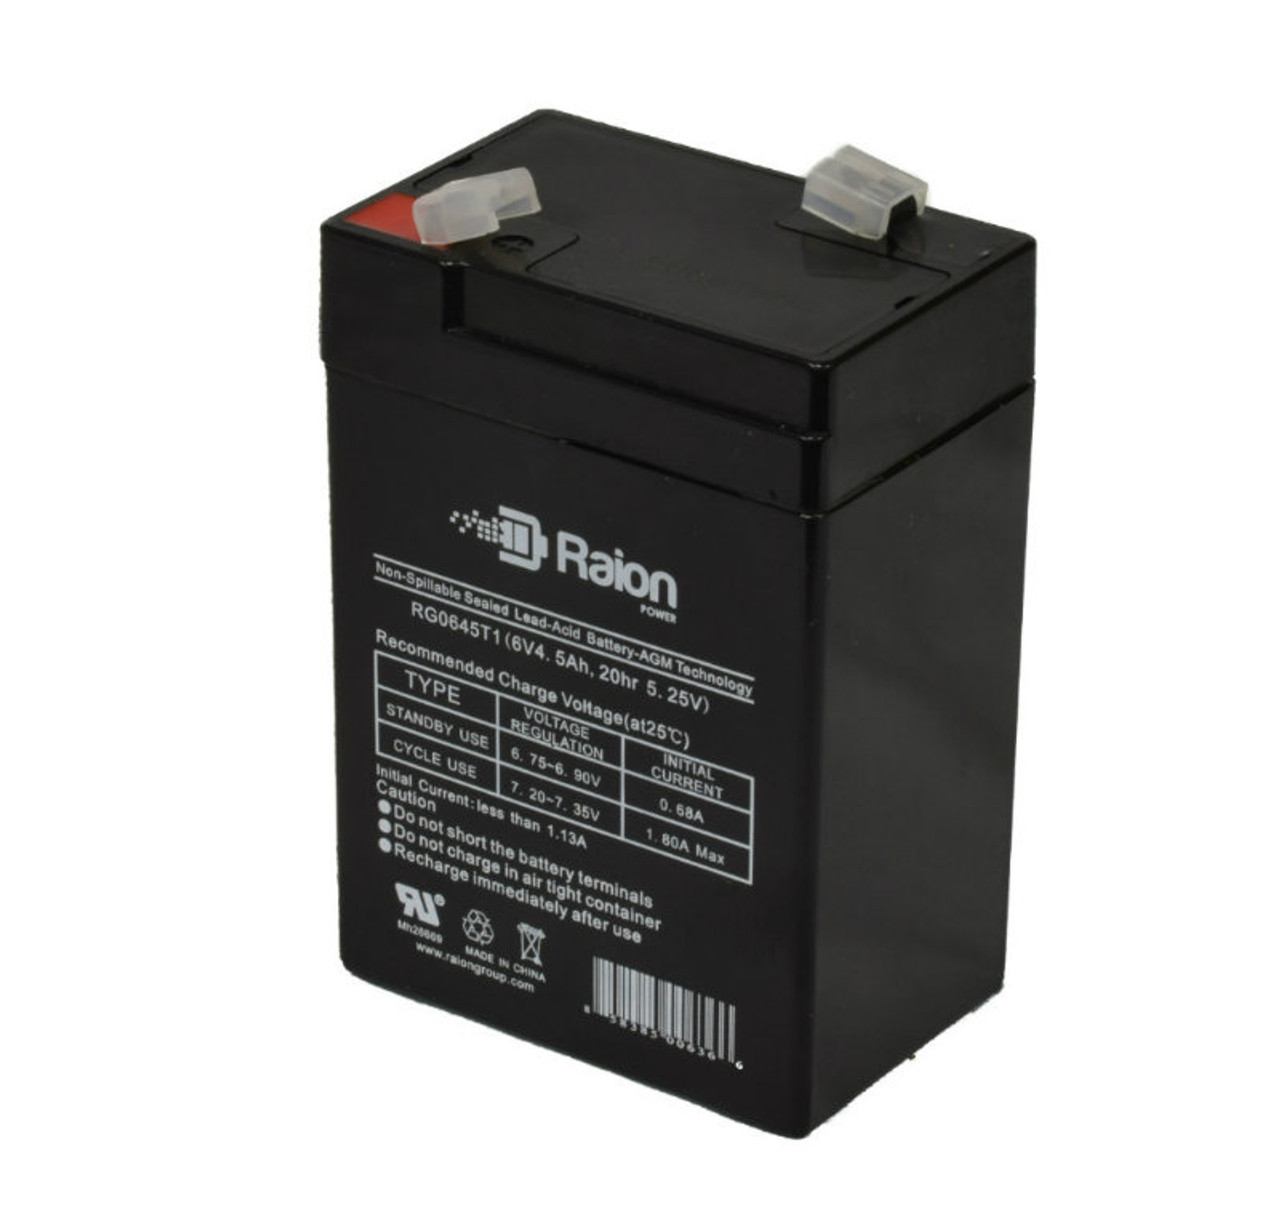 Raion Power RG0645T1 6V 4.5Ah Replacement Battery Cartridge for B. Braun 522 Intell Pump